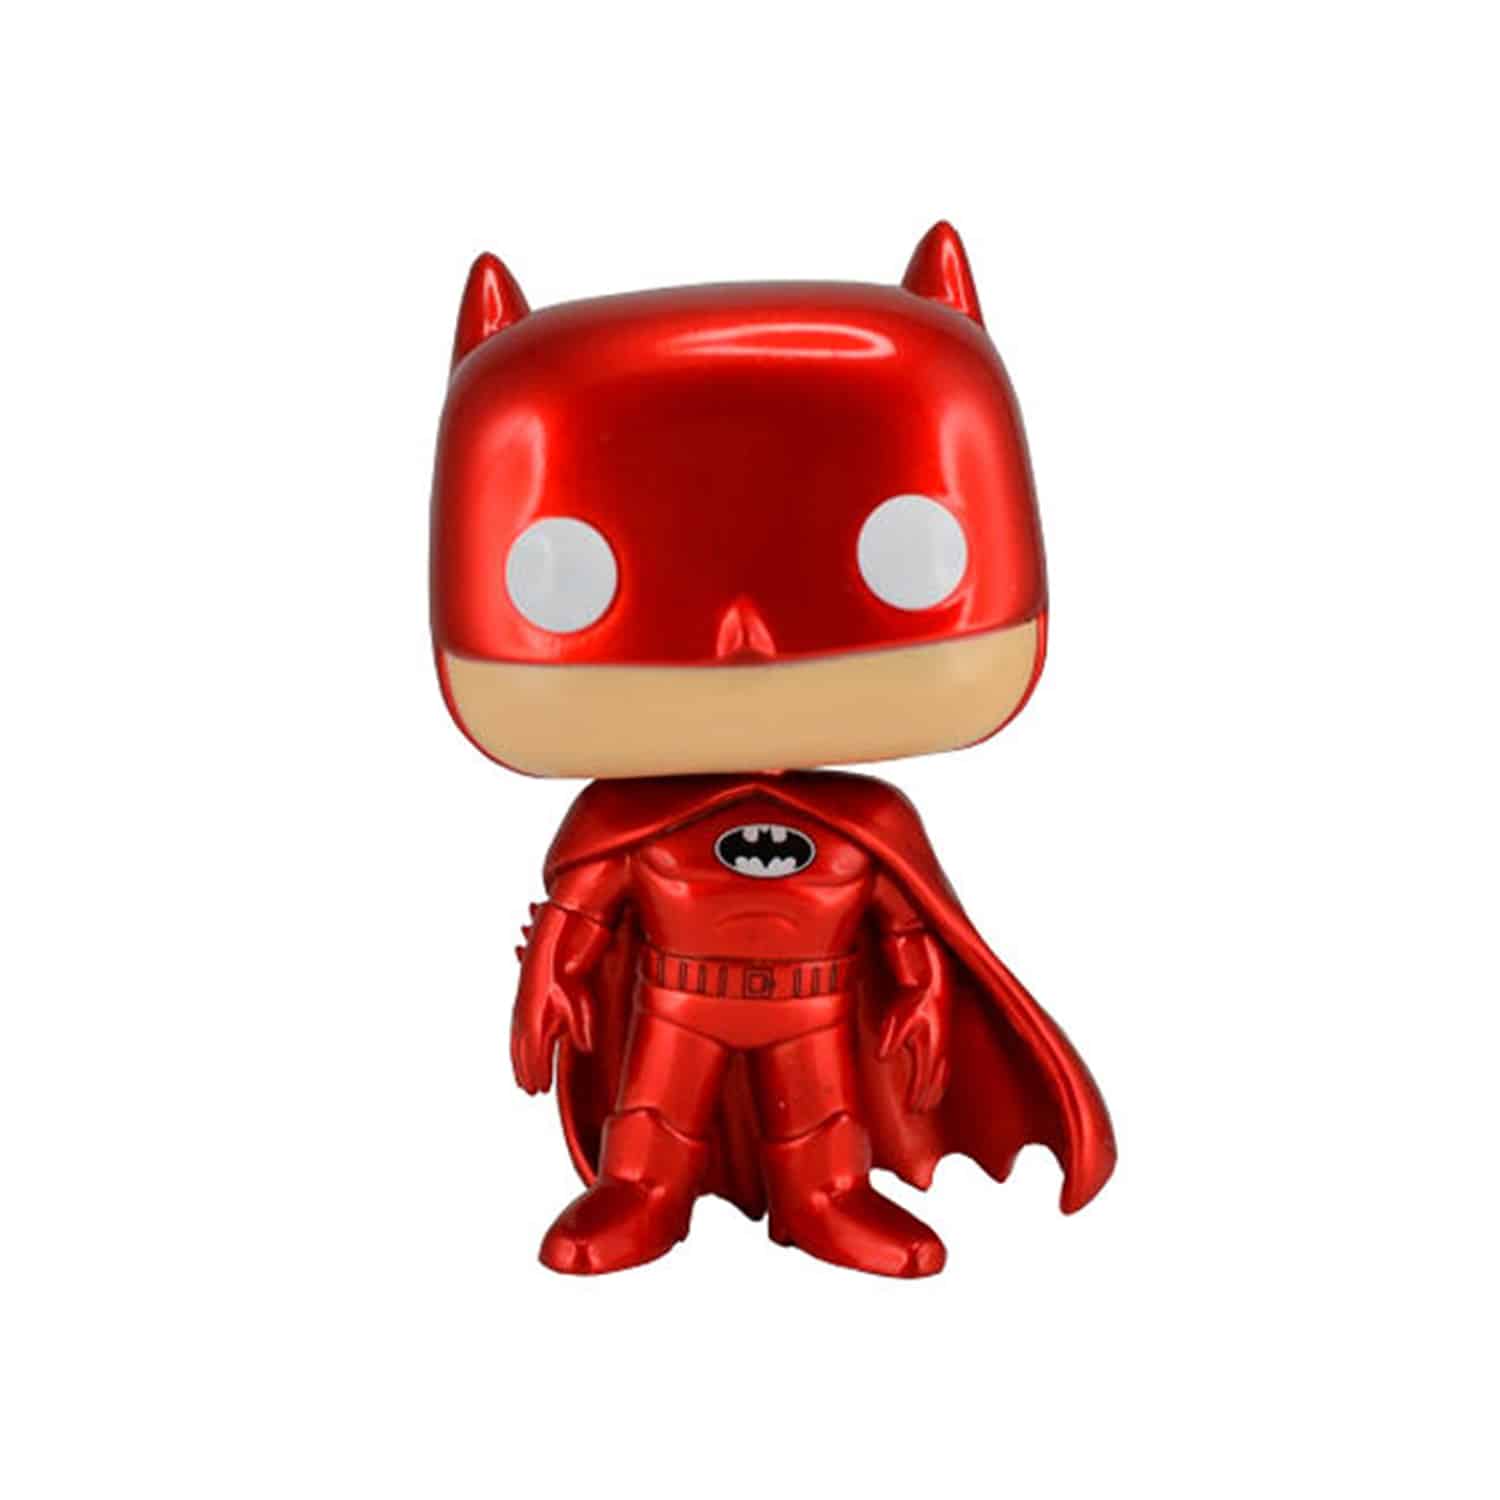 Batman - Red Metallic Batman Funko Pop! (Exclusive)